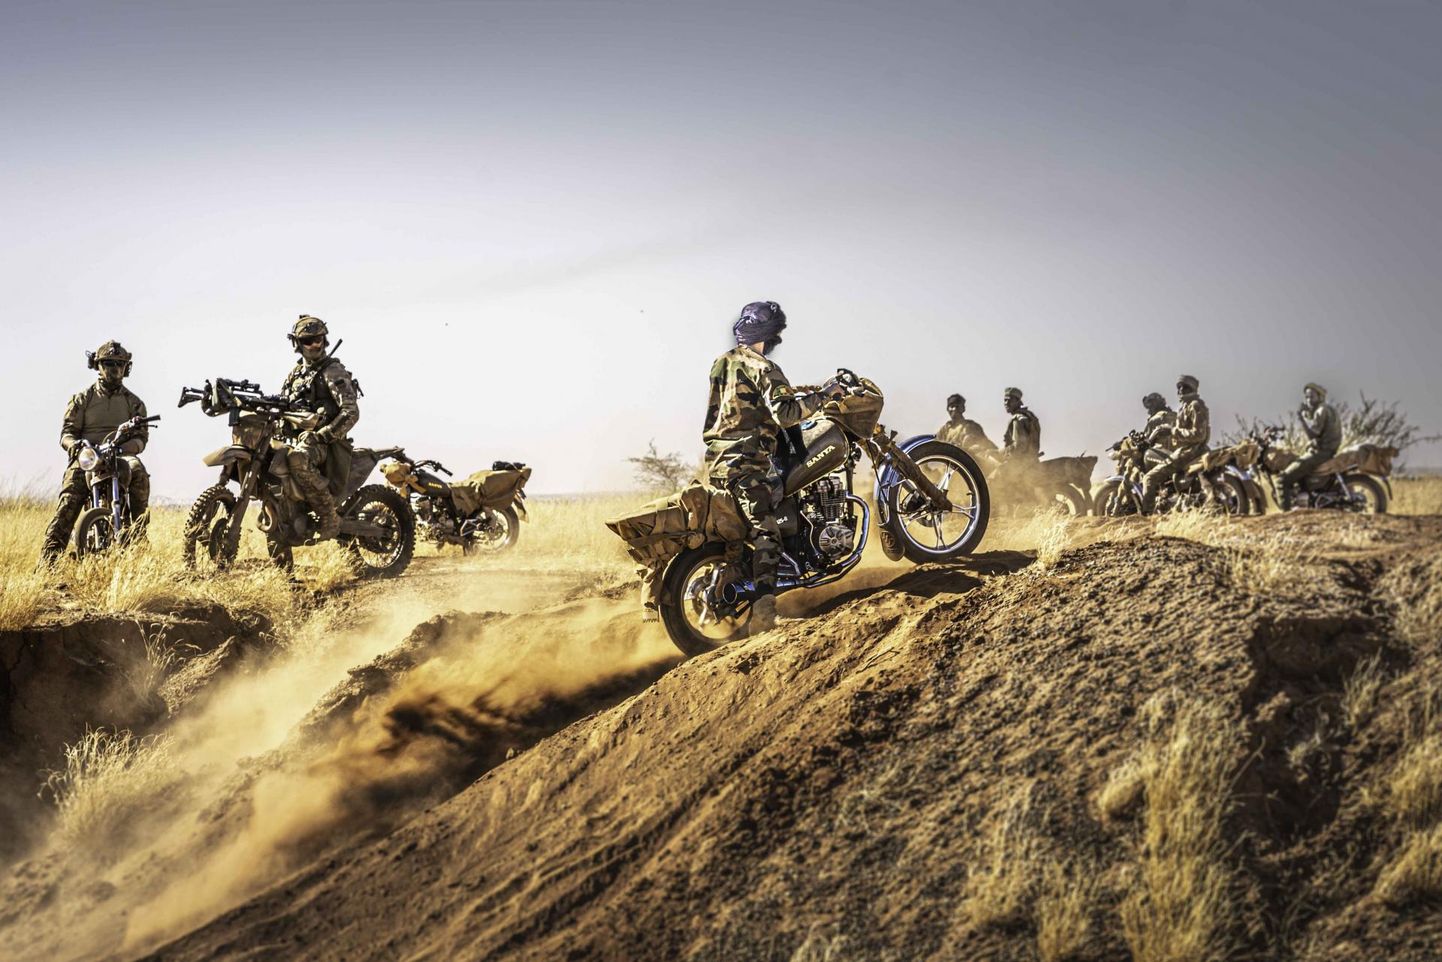 Estonian special forces in Mali.